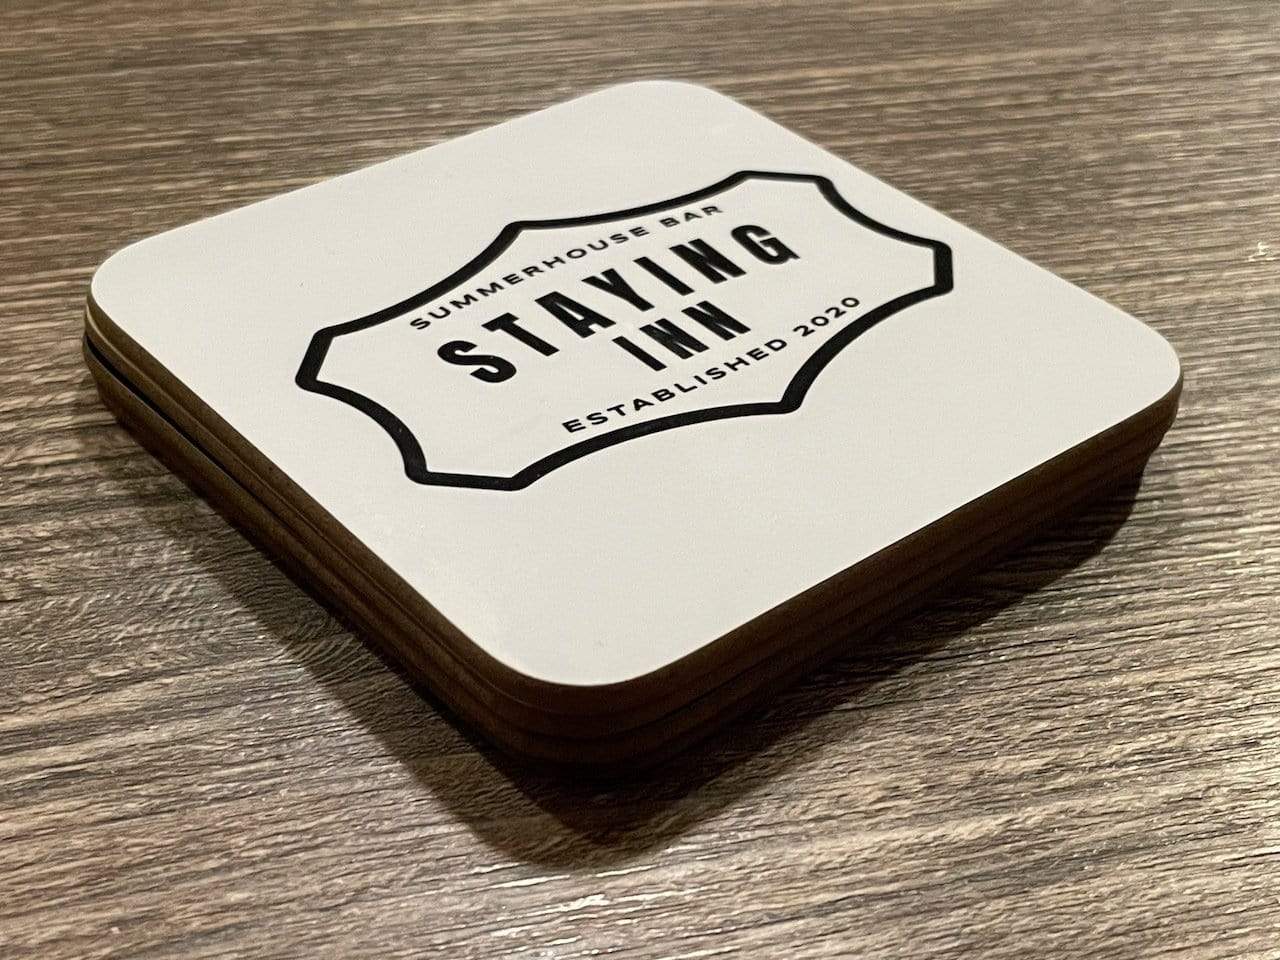 Pub Shed Branding Kit #1 Raise the Bar Print and Design - Raise the Bar